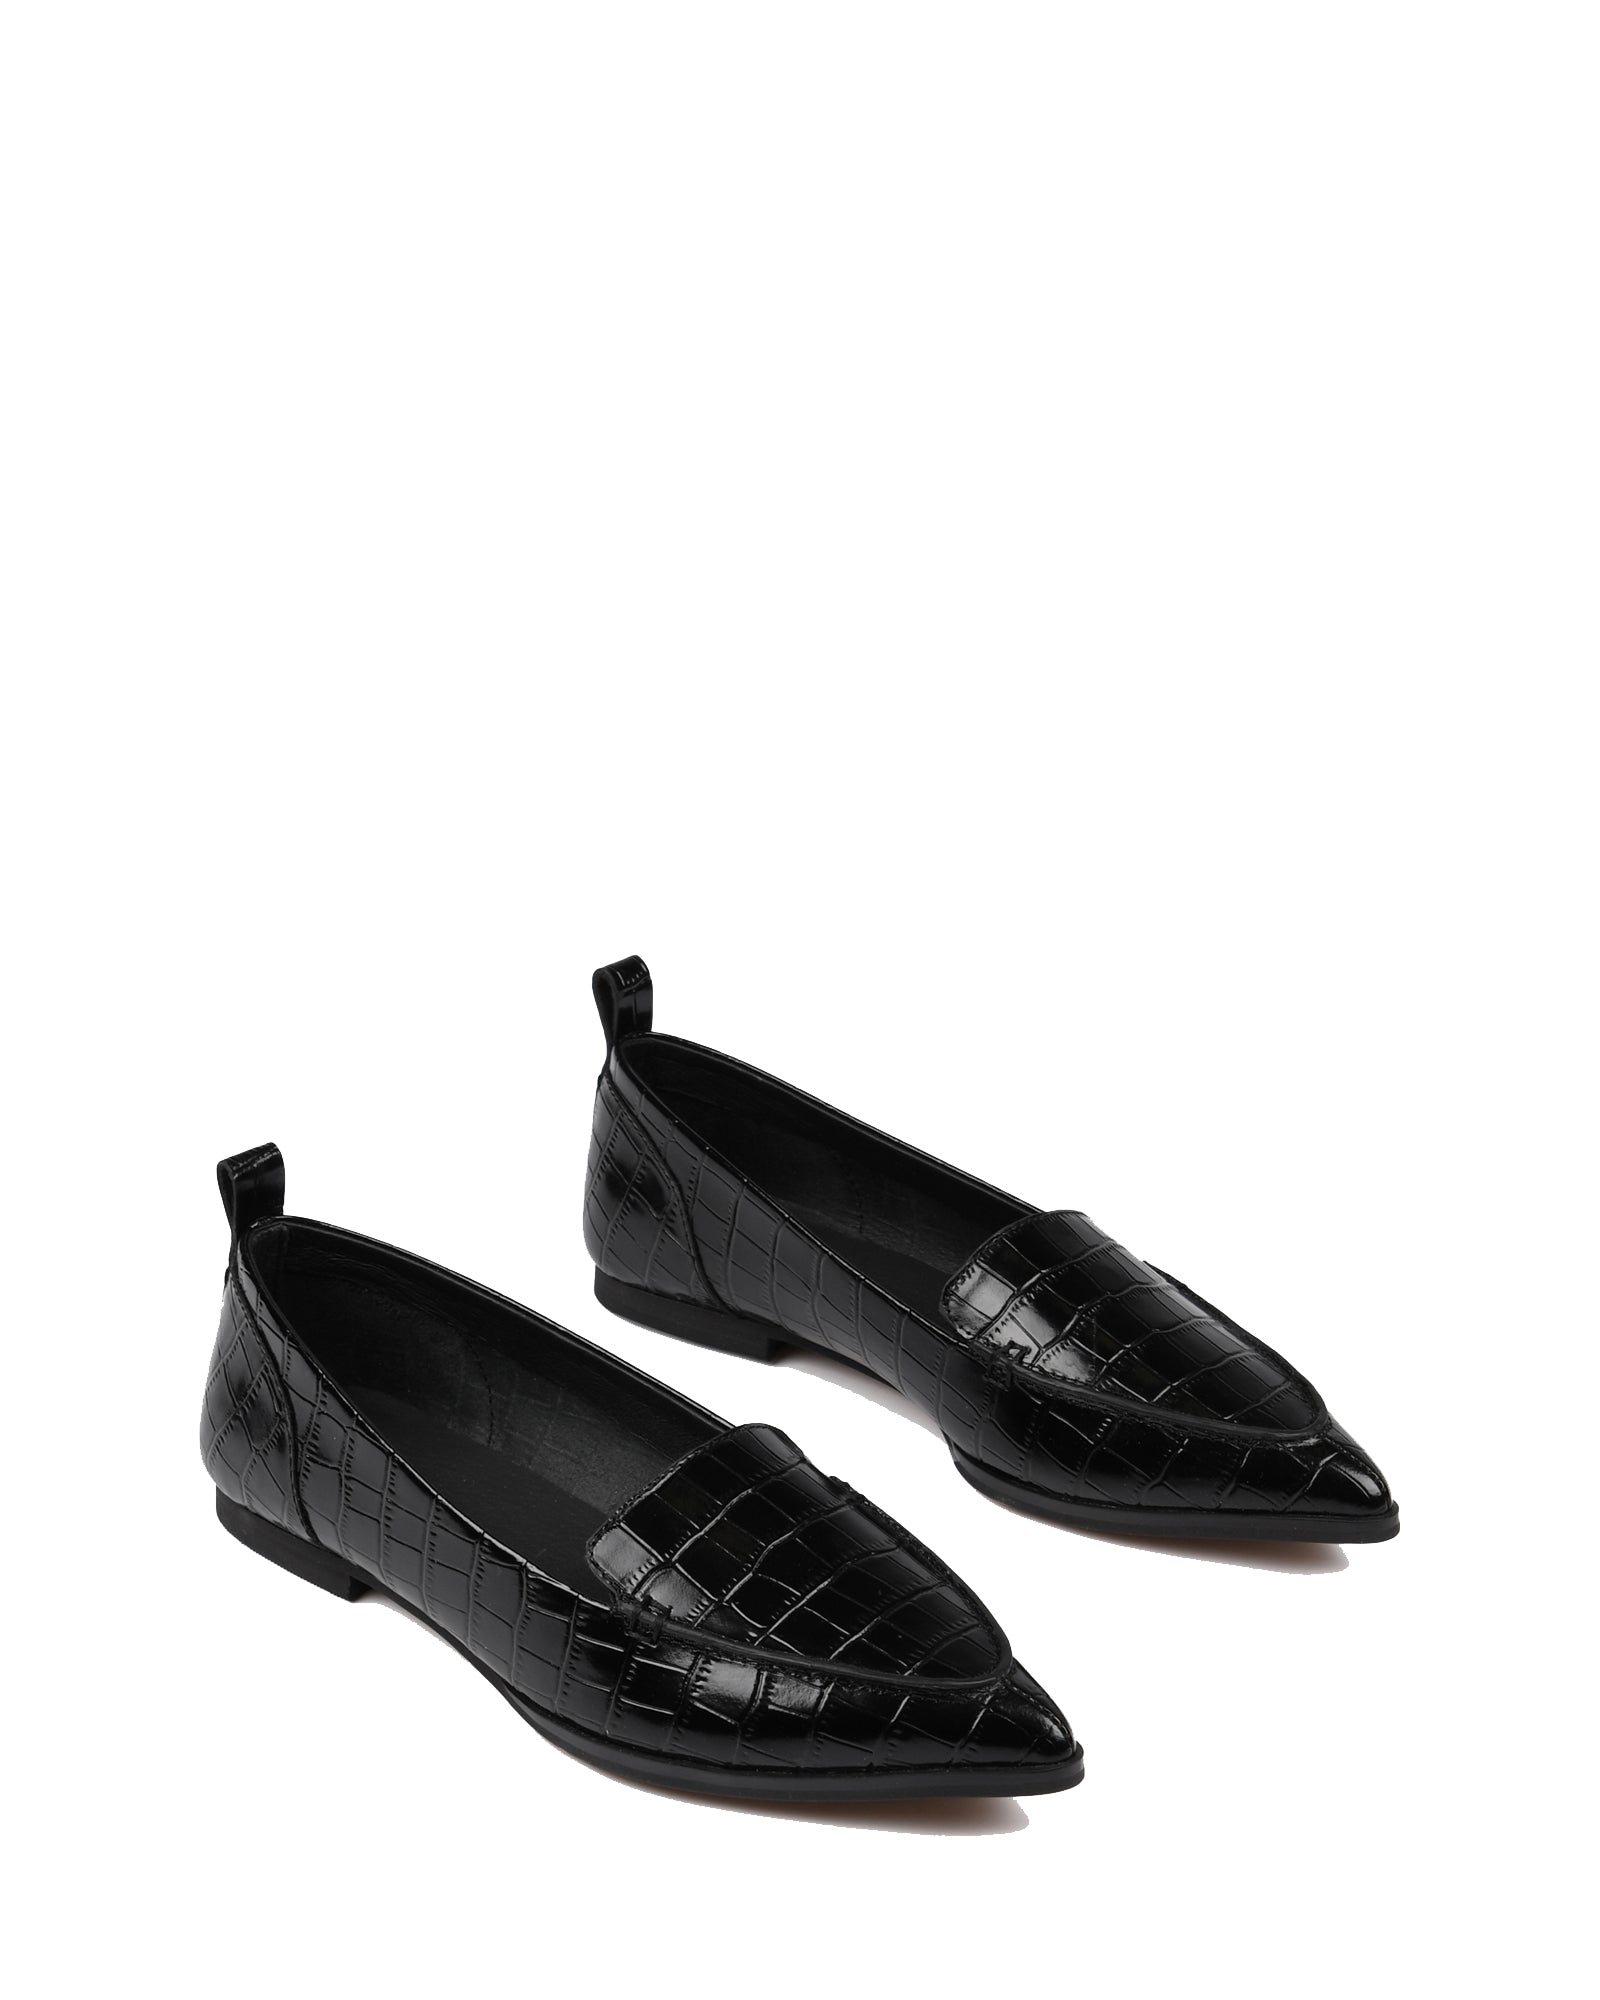 Womens Max Mara Sandals | Crocodile-Print Leather Sandals Black - Marty B  Stone